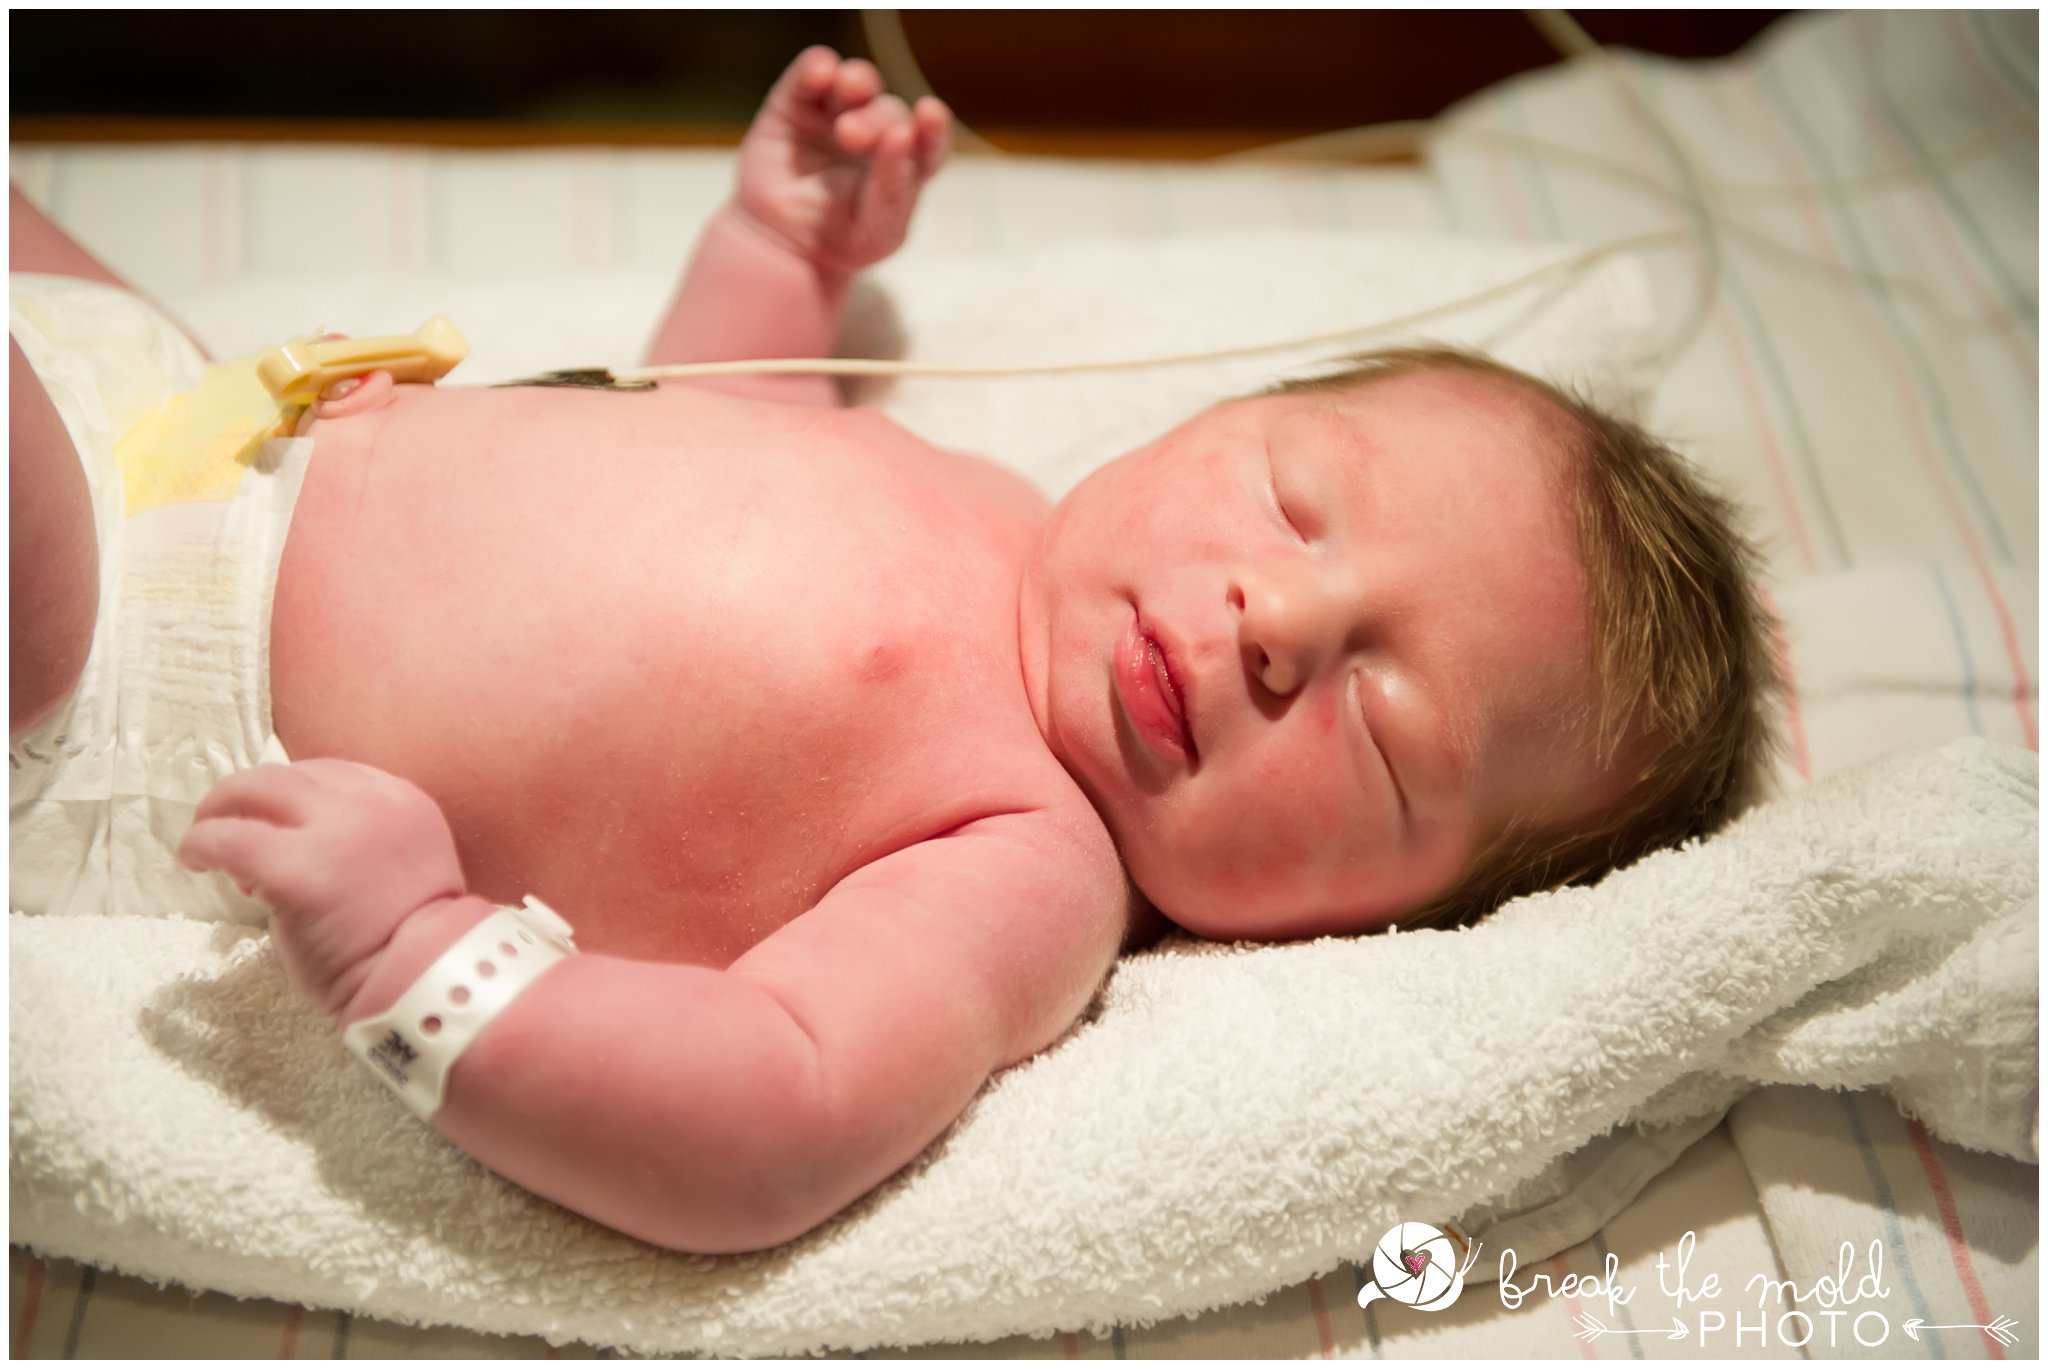 fresh-24-newborn-in-hospital-break-the-mold-photo-baby-girl-sweet-in-room-photos (11).jpg